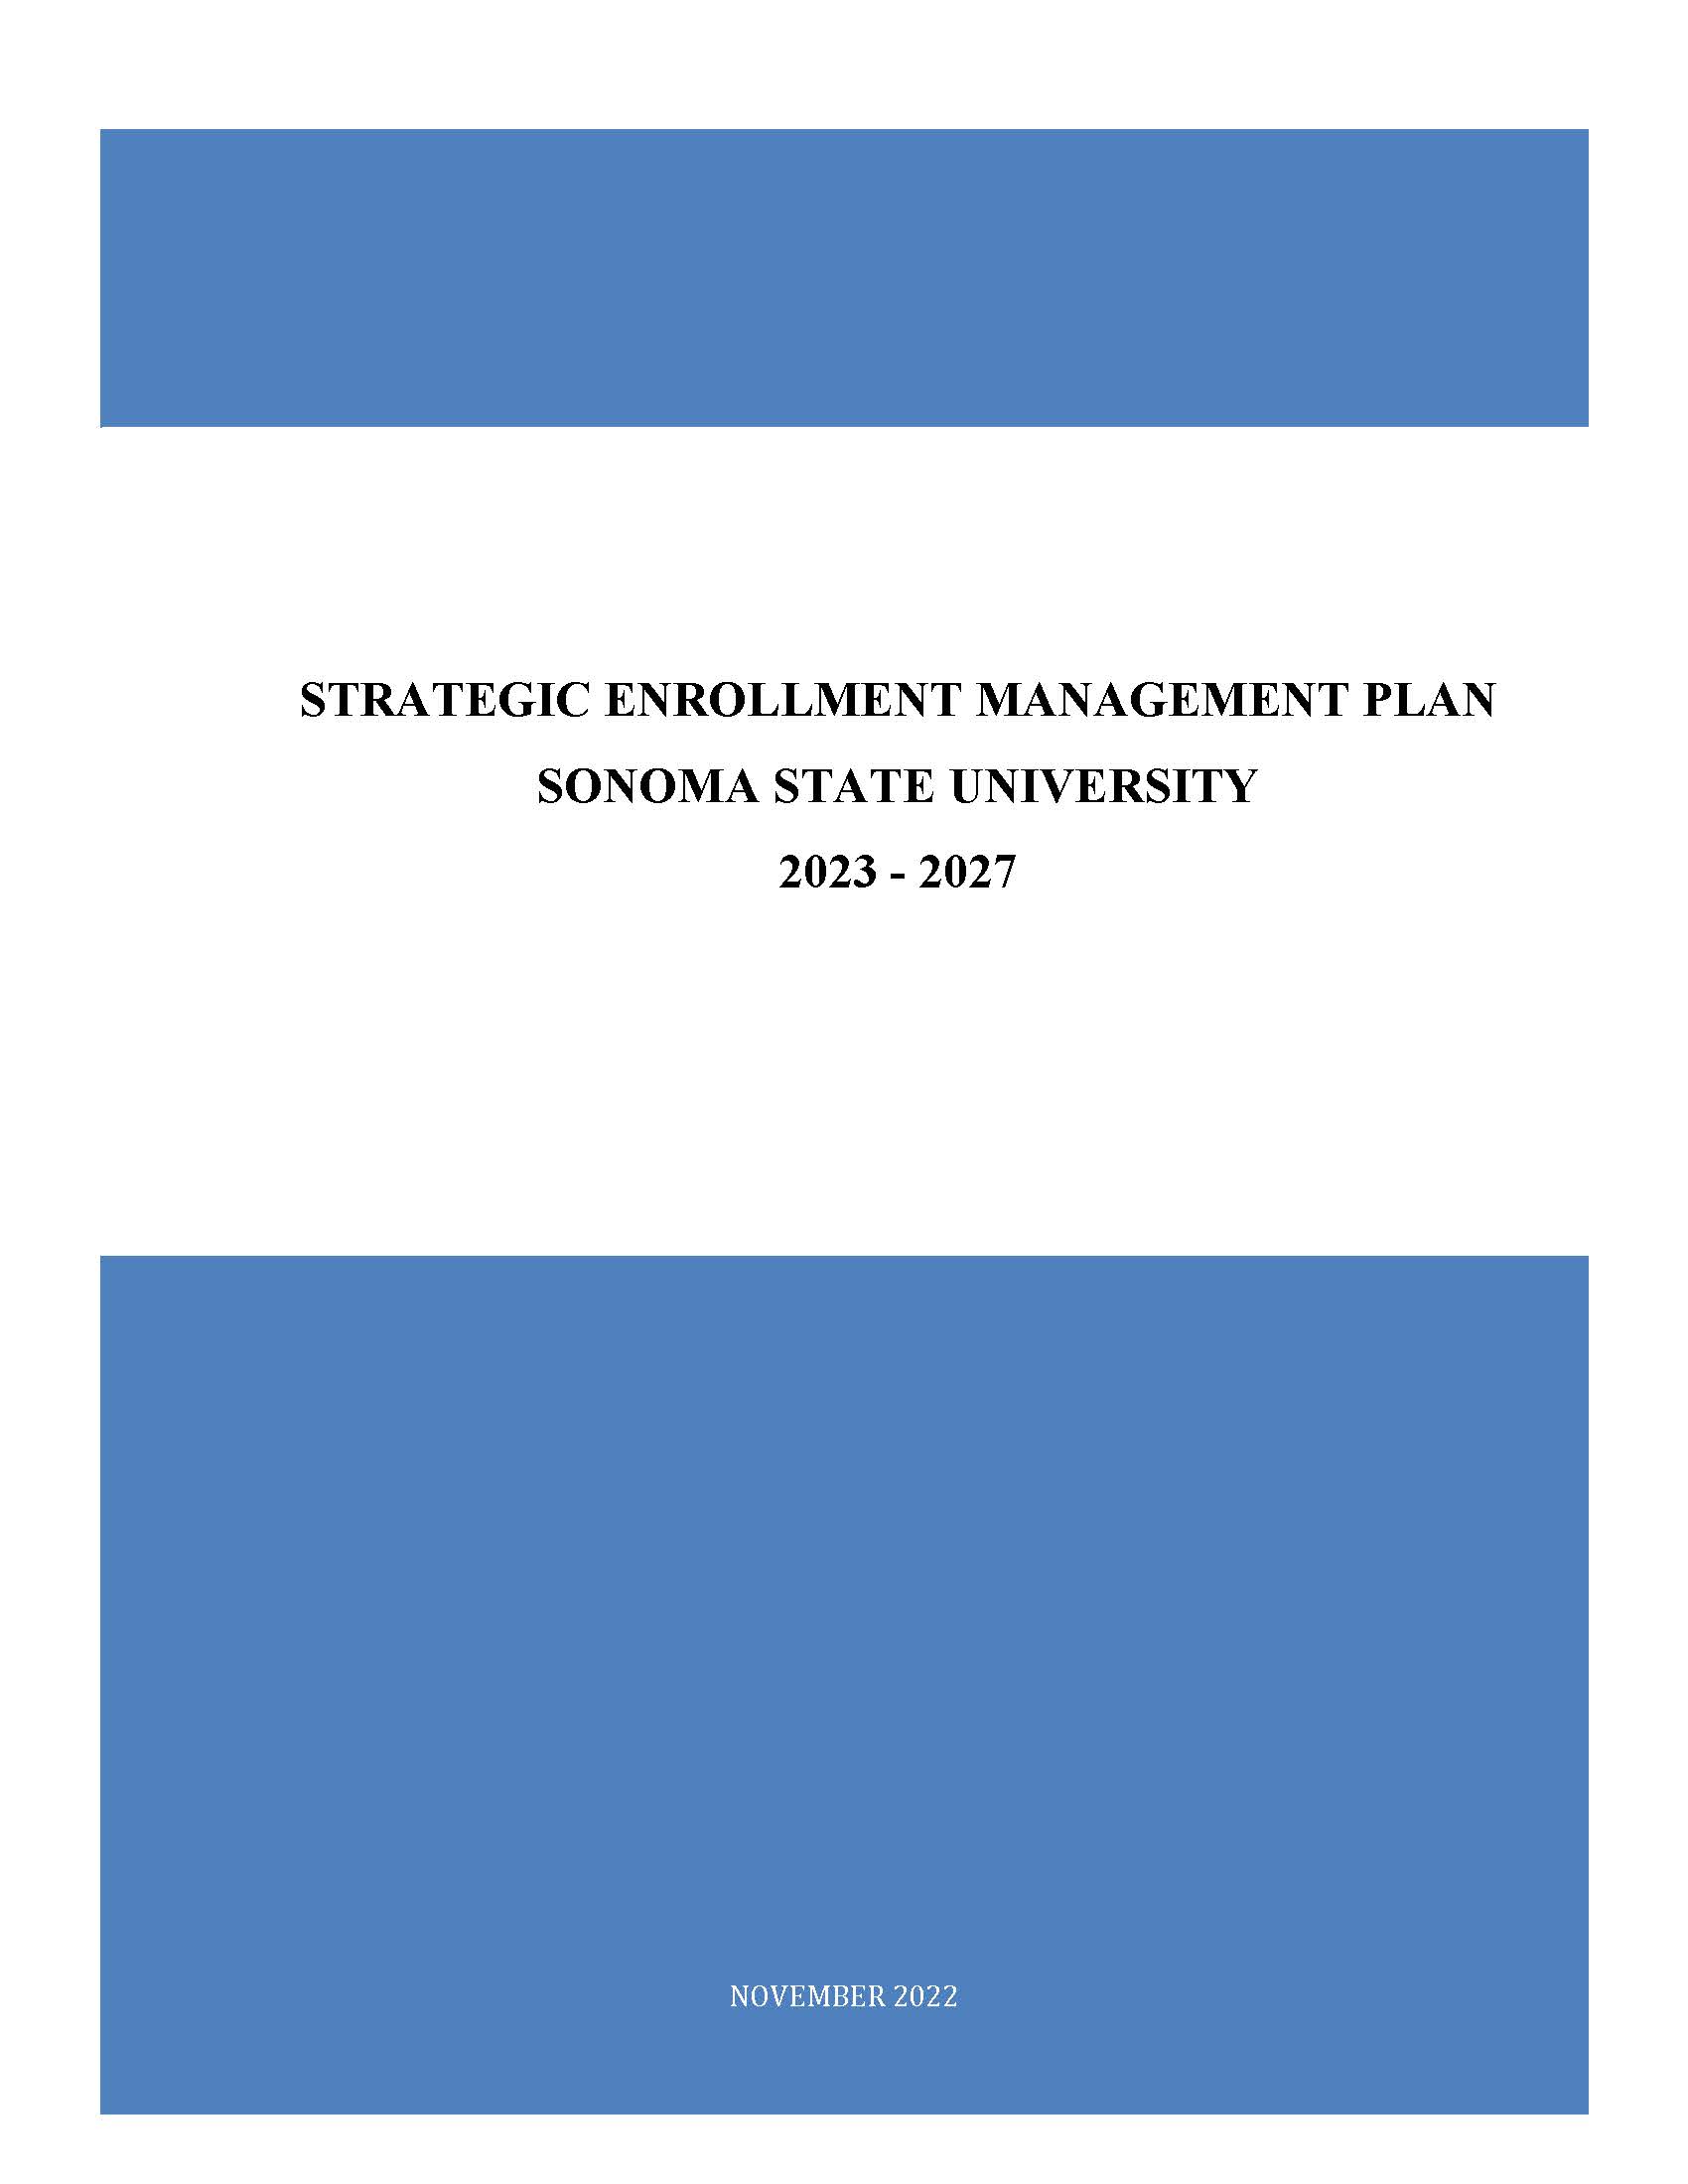 Strategic Enrollment Management Plan